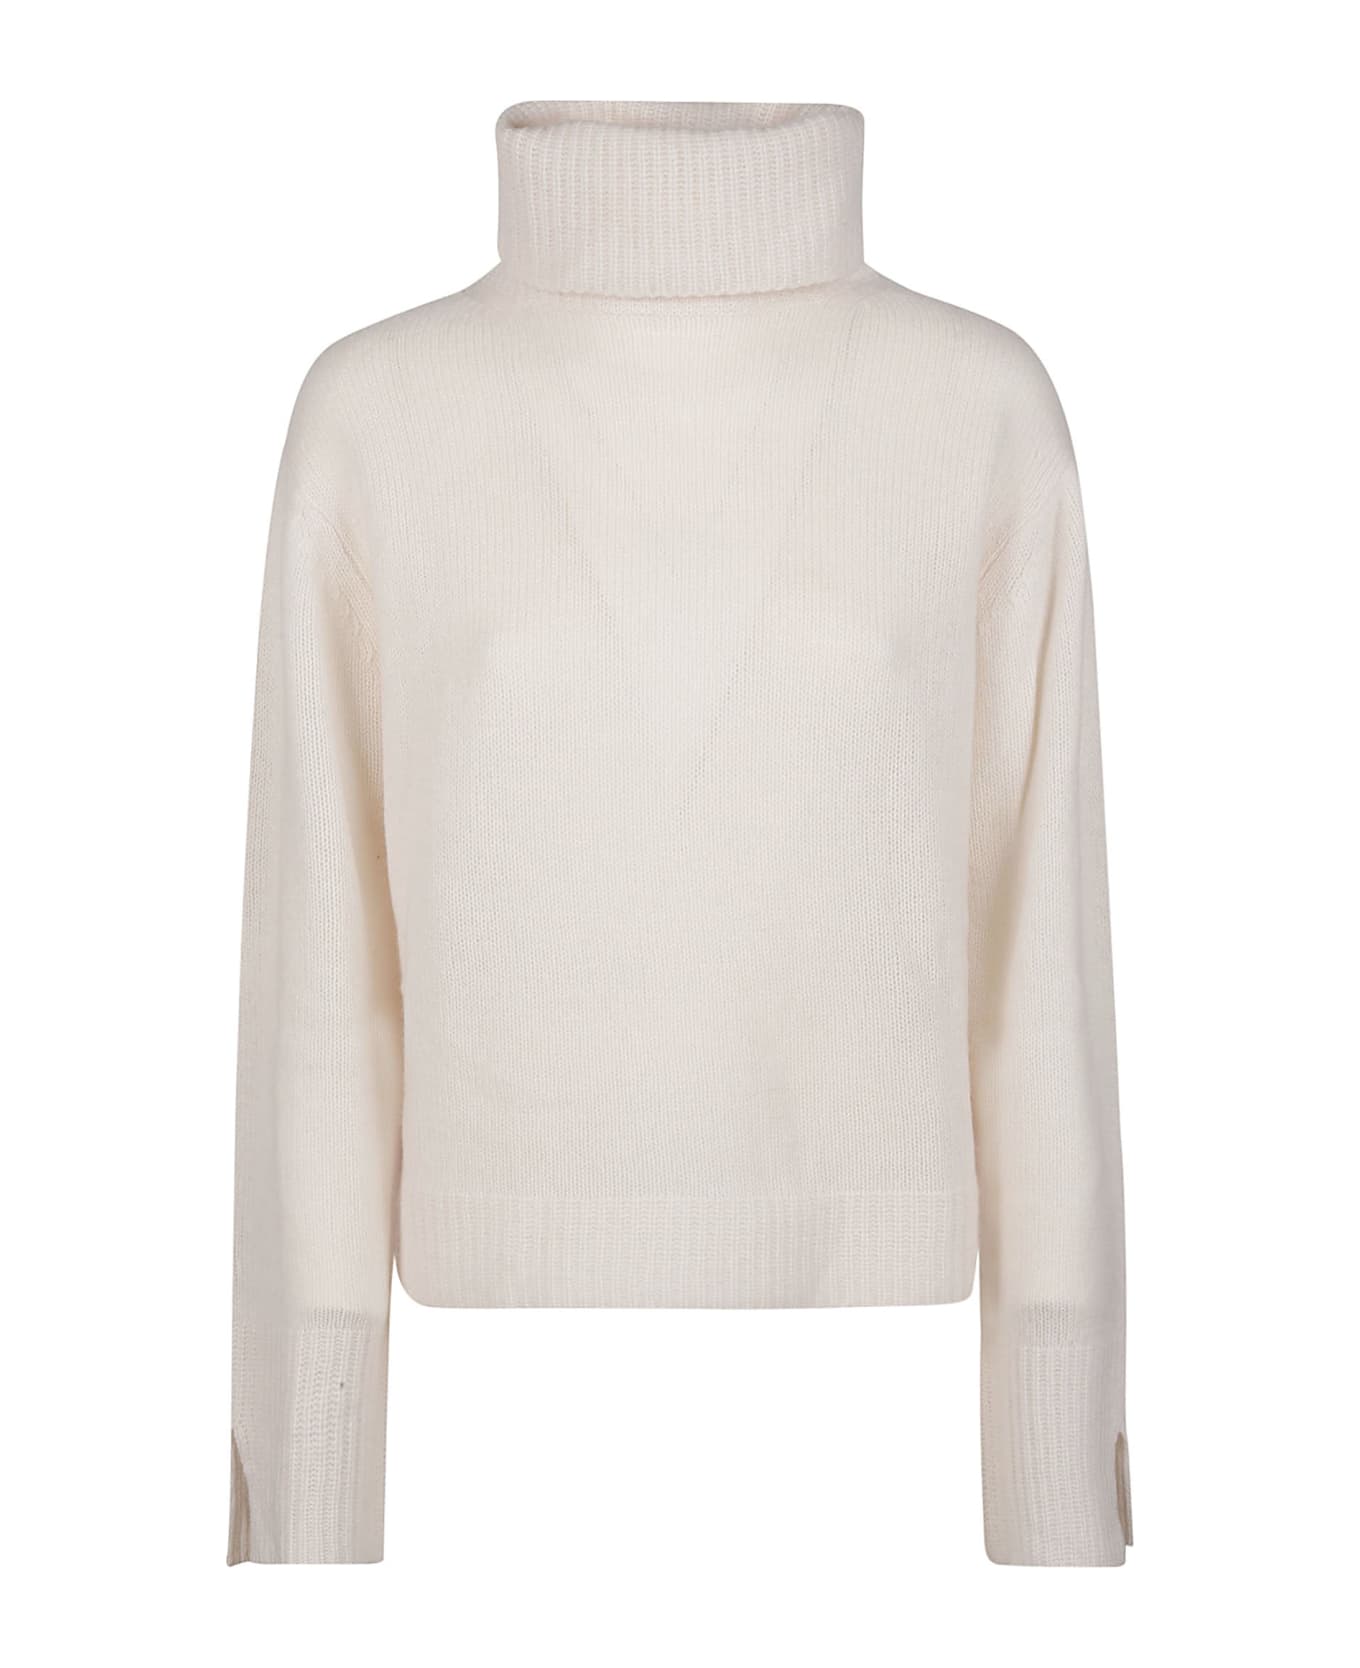 360Cashmere Eliora Cowl Neck Sweater - Antique White